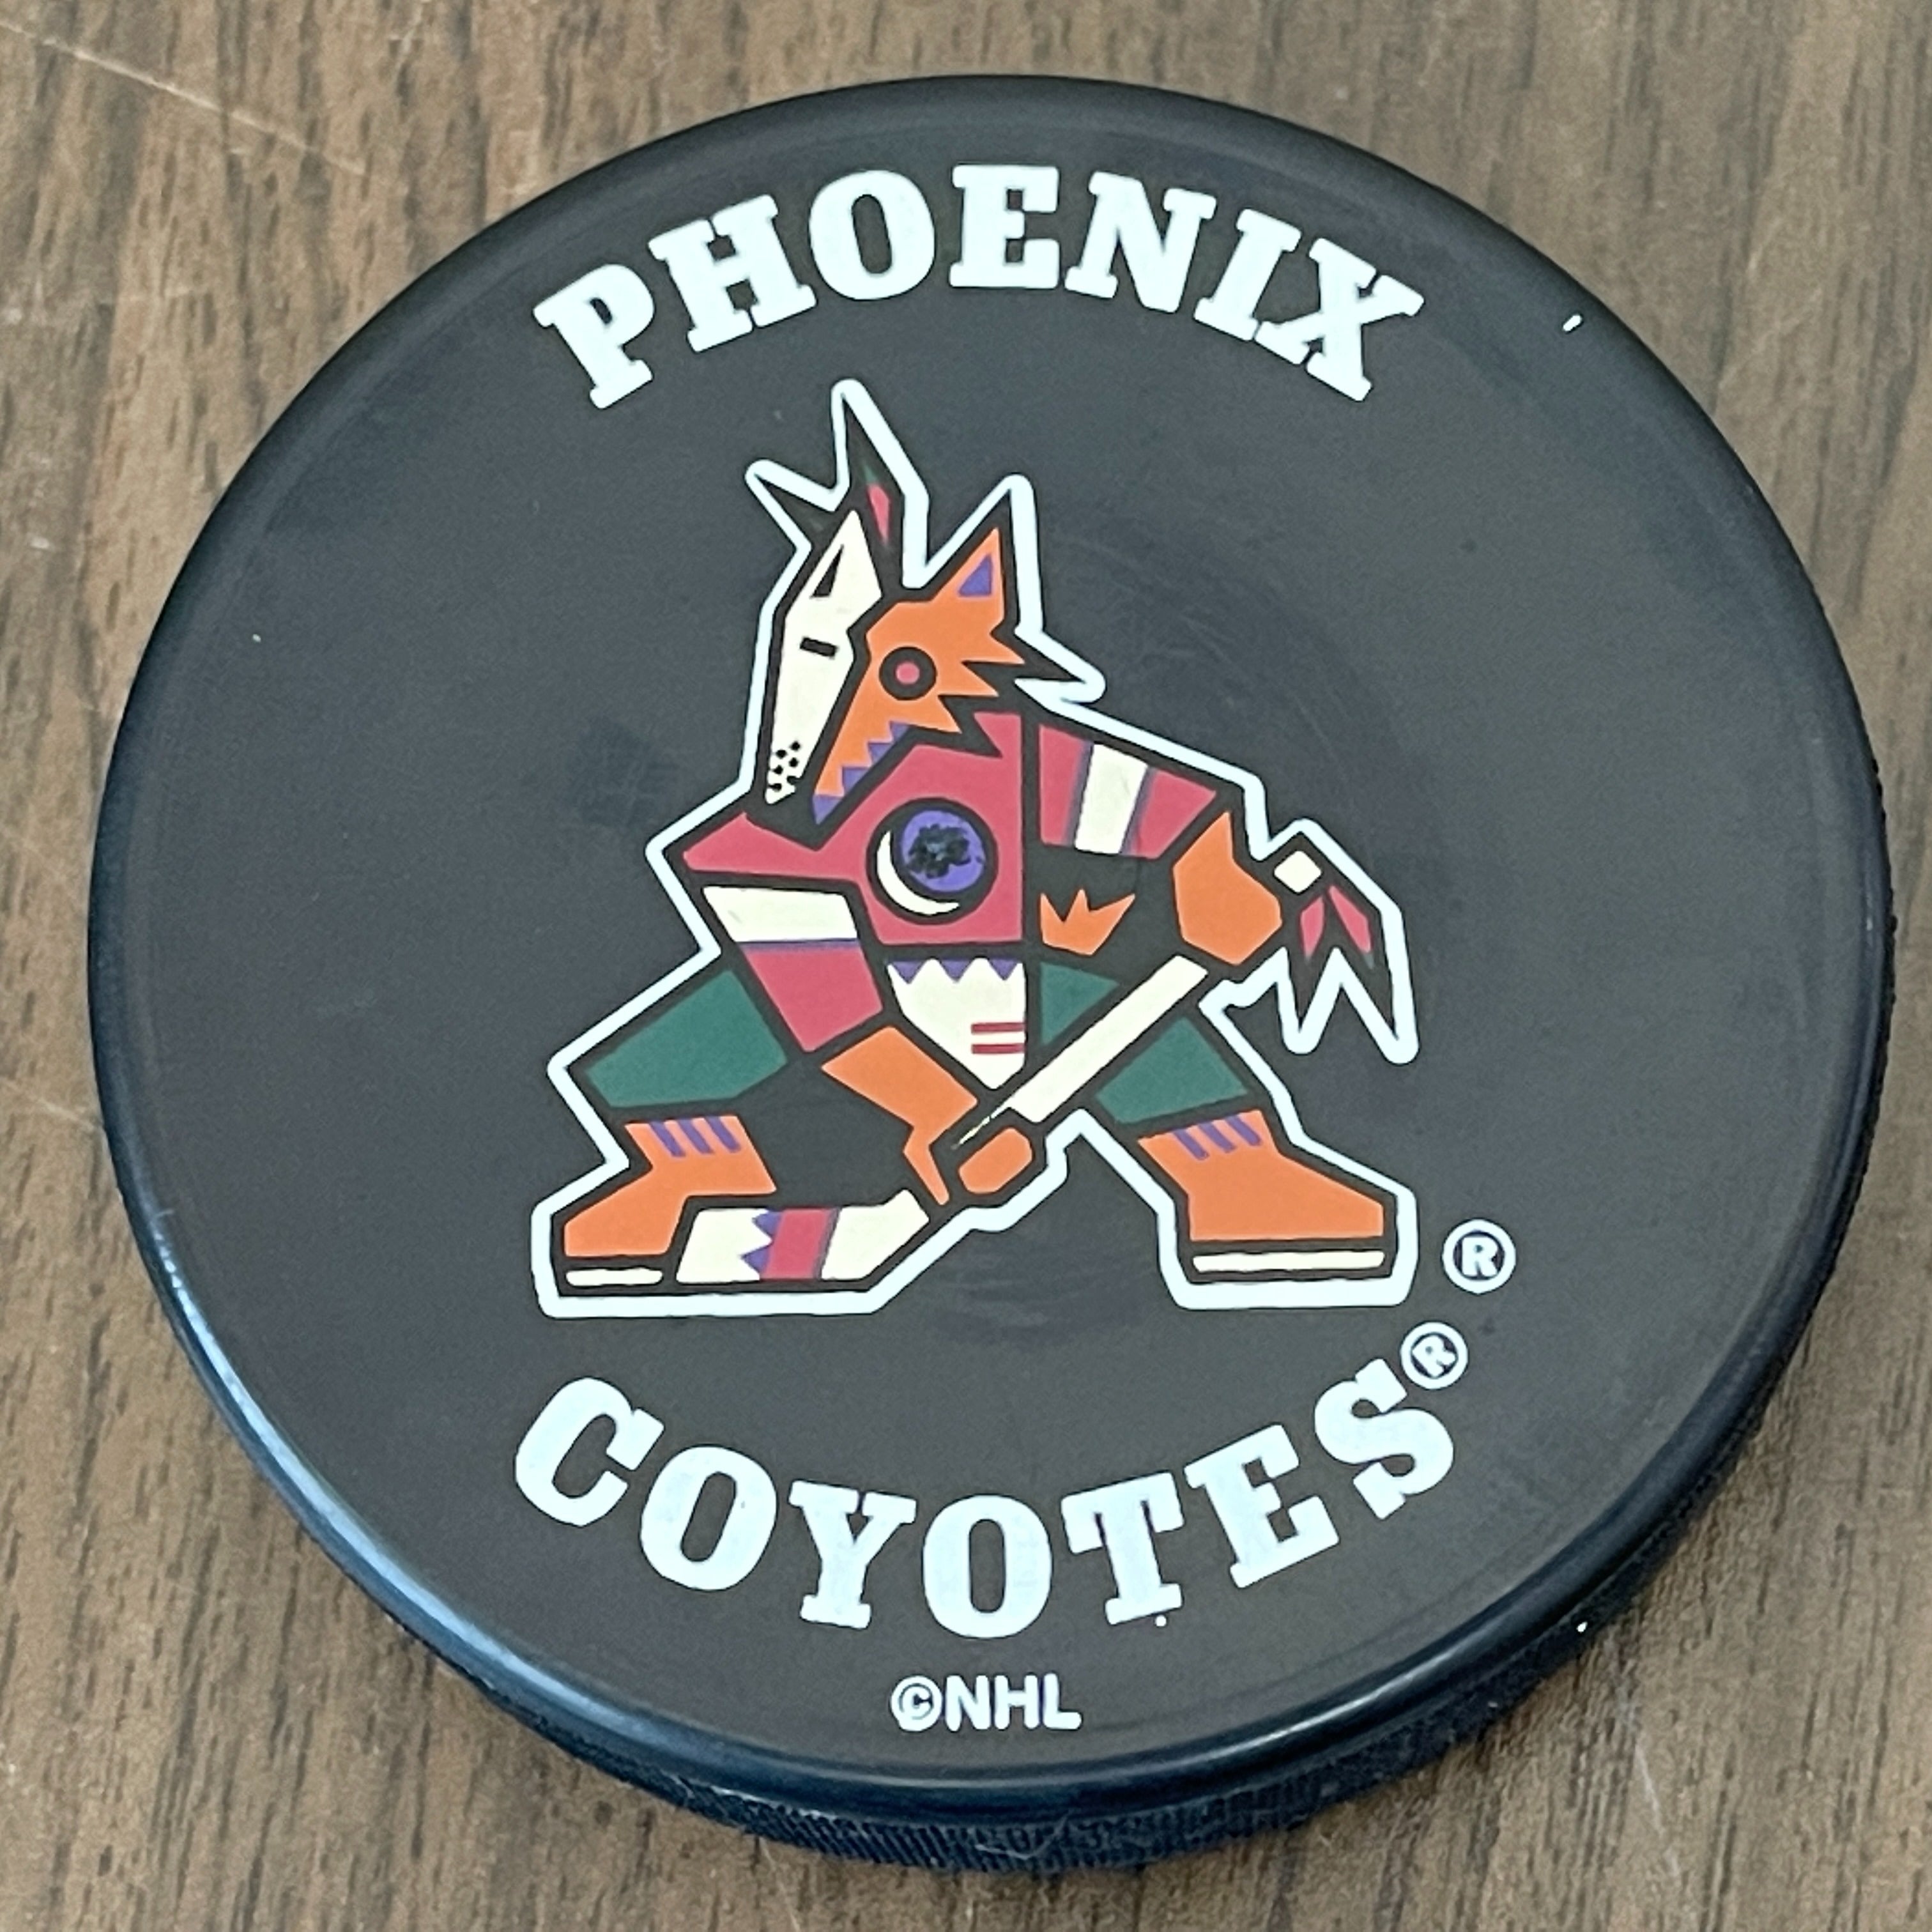 Kachina's Back! Coyotes Announce Full-Time Return of Classic Logo